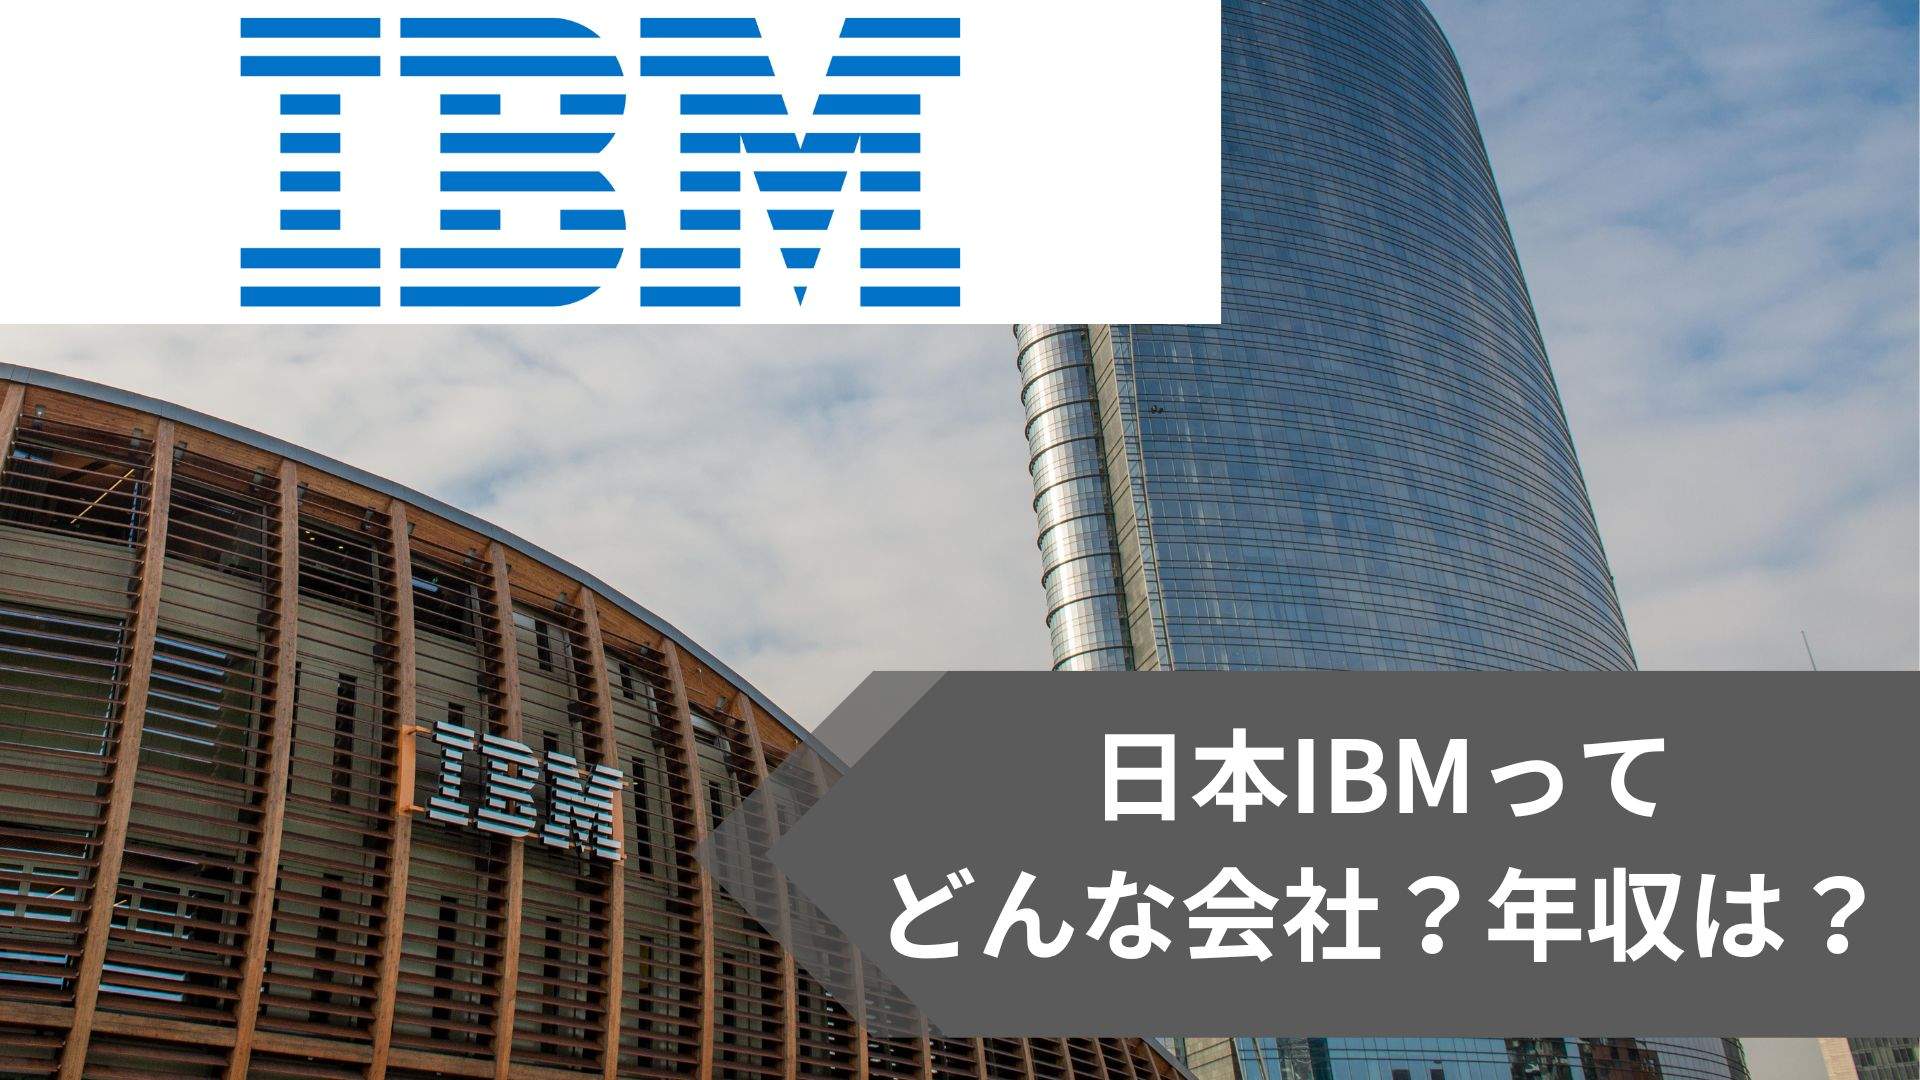 IBM年収